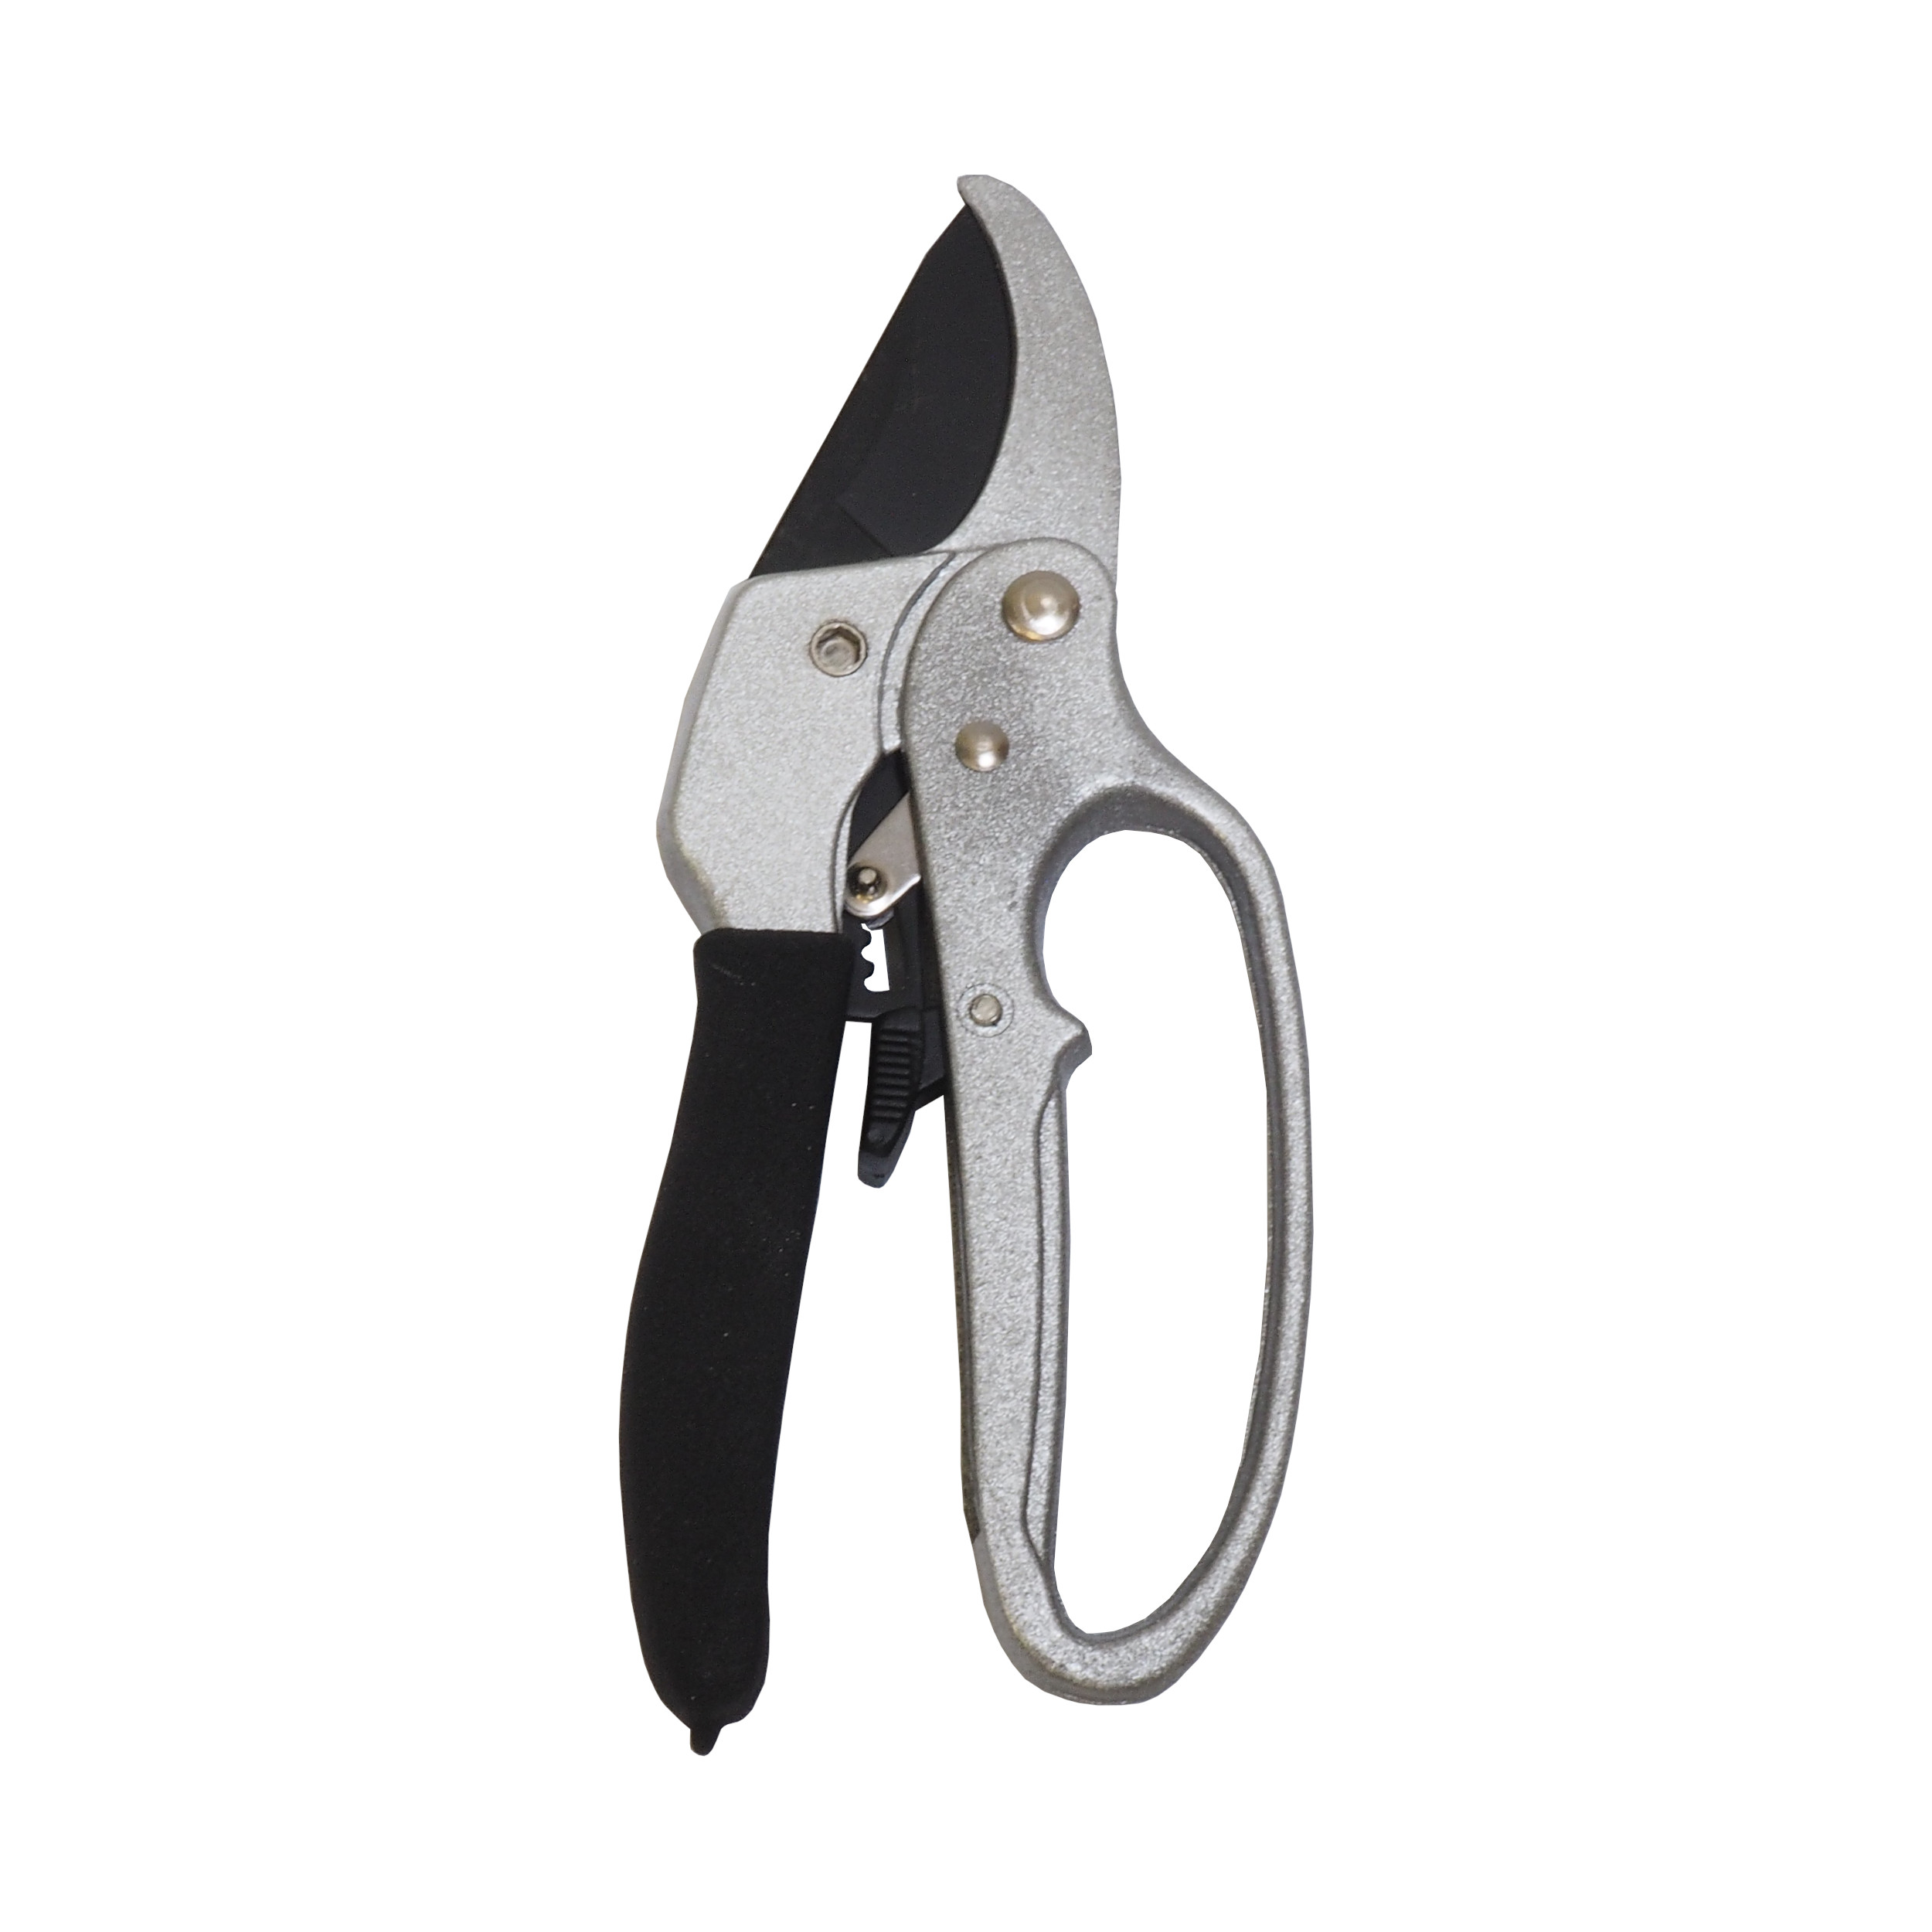 REFLEX nůžky zahradnické, hliníkové, ráčnové – krokovací, s chráničem prstů, 200 mm 0.25 Kg TOP Sklad4 307155 122